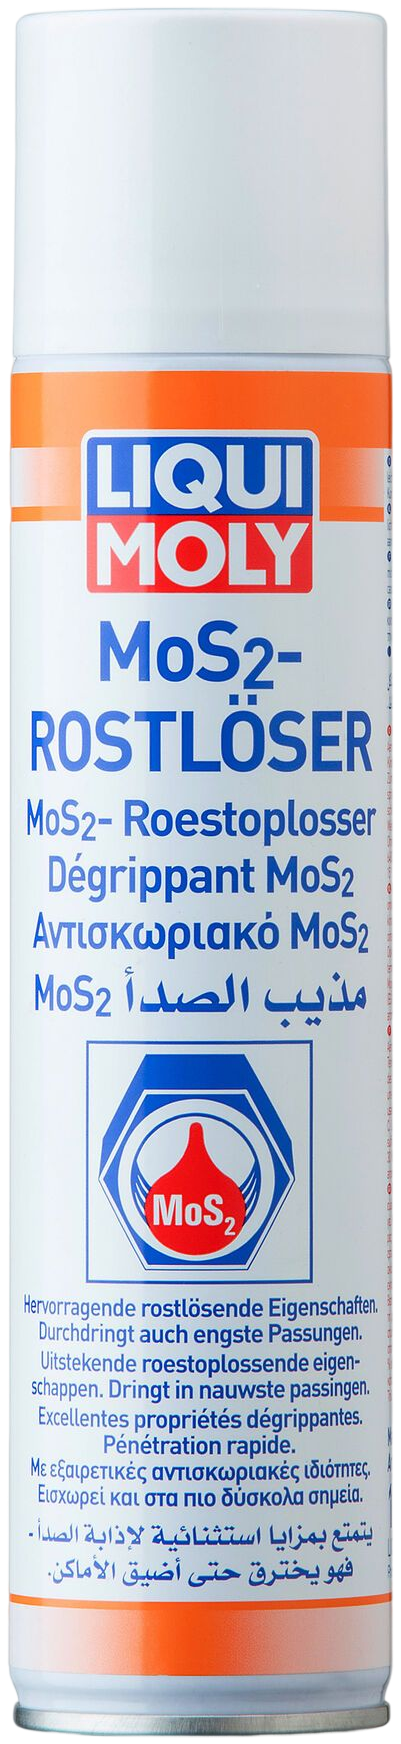 Liqui Moly MoS2-roestoplosser, 12 x 300 ml detail 2